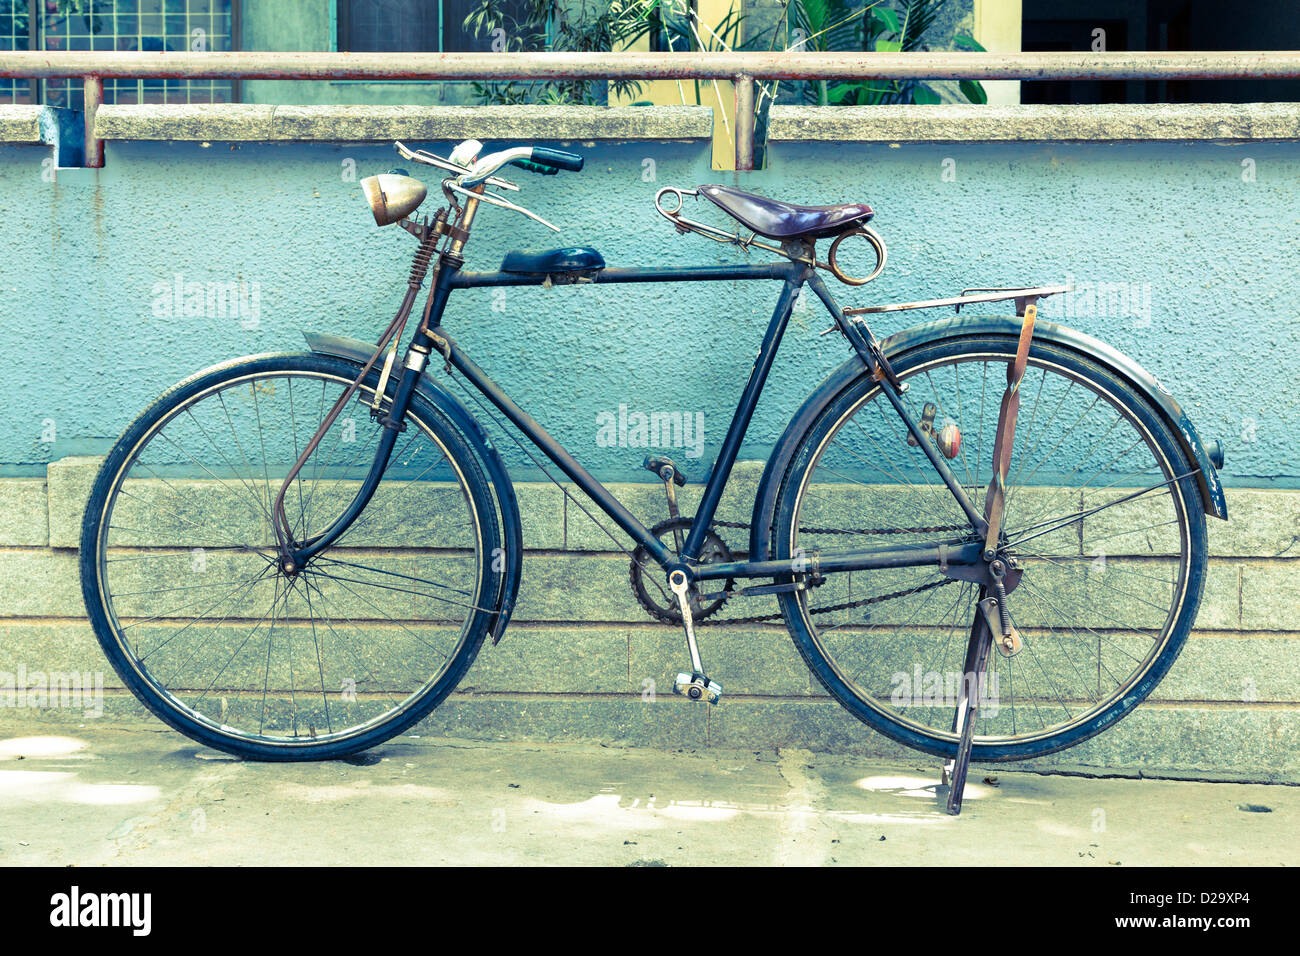 Vintage Retro-Fahrrad in Indien, Crossen getönten Bild Stockfoto